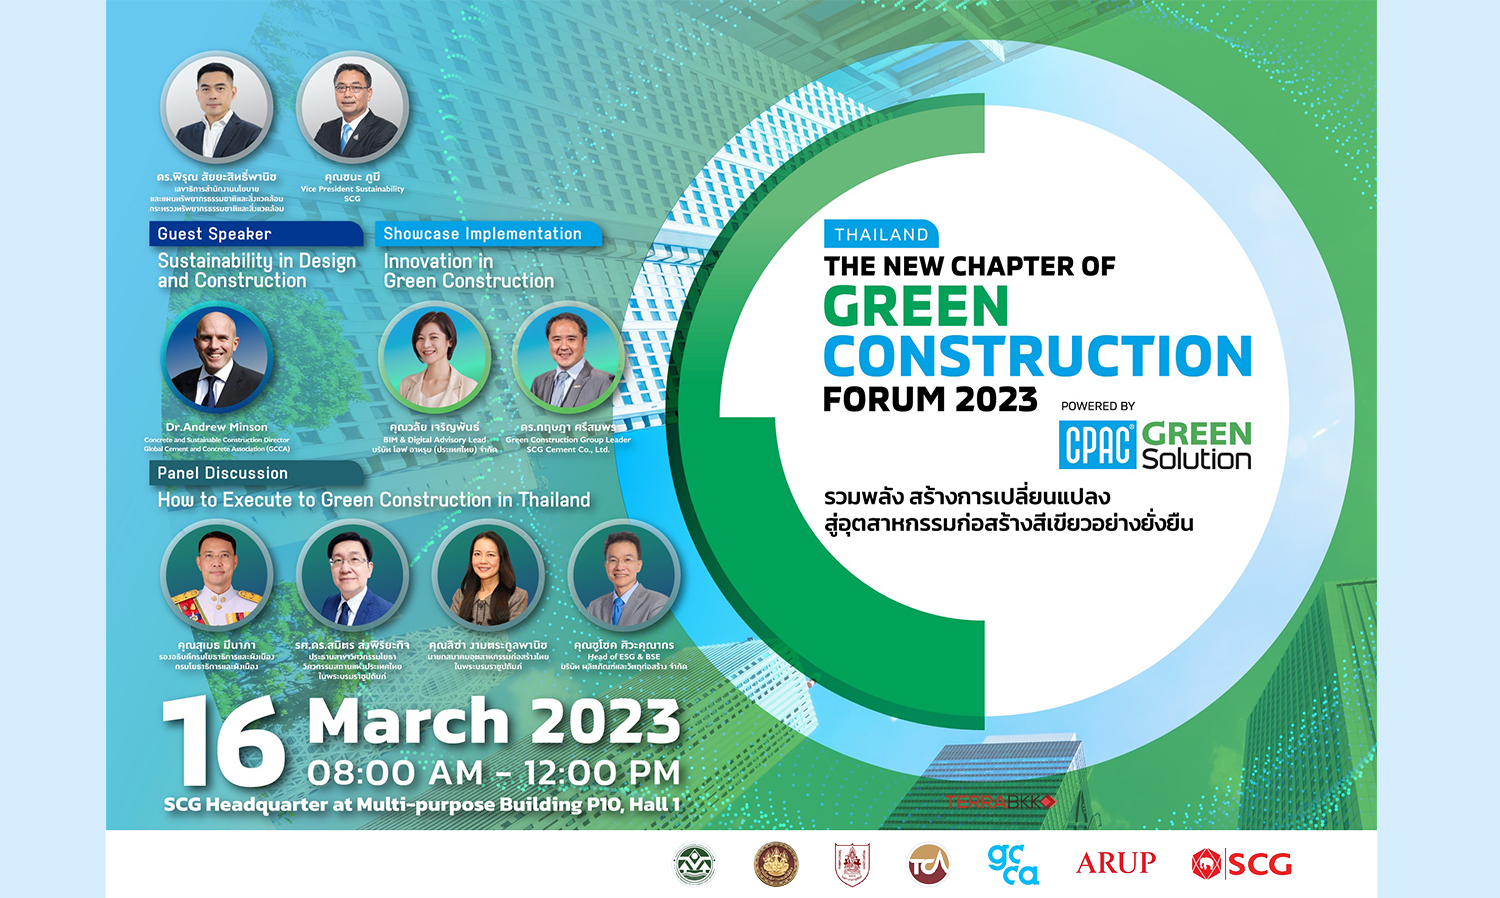 CPAC Green Solution ชวนรวมพลัง สร้างการเปลี่ยนแปลงสู่อุตสาหกรรมก่อสร้างสีเขียวอย่างยั่งยืน  ในงาน “Thailand The New Chapter of Green Construction Forum 2023” 